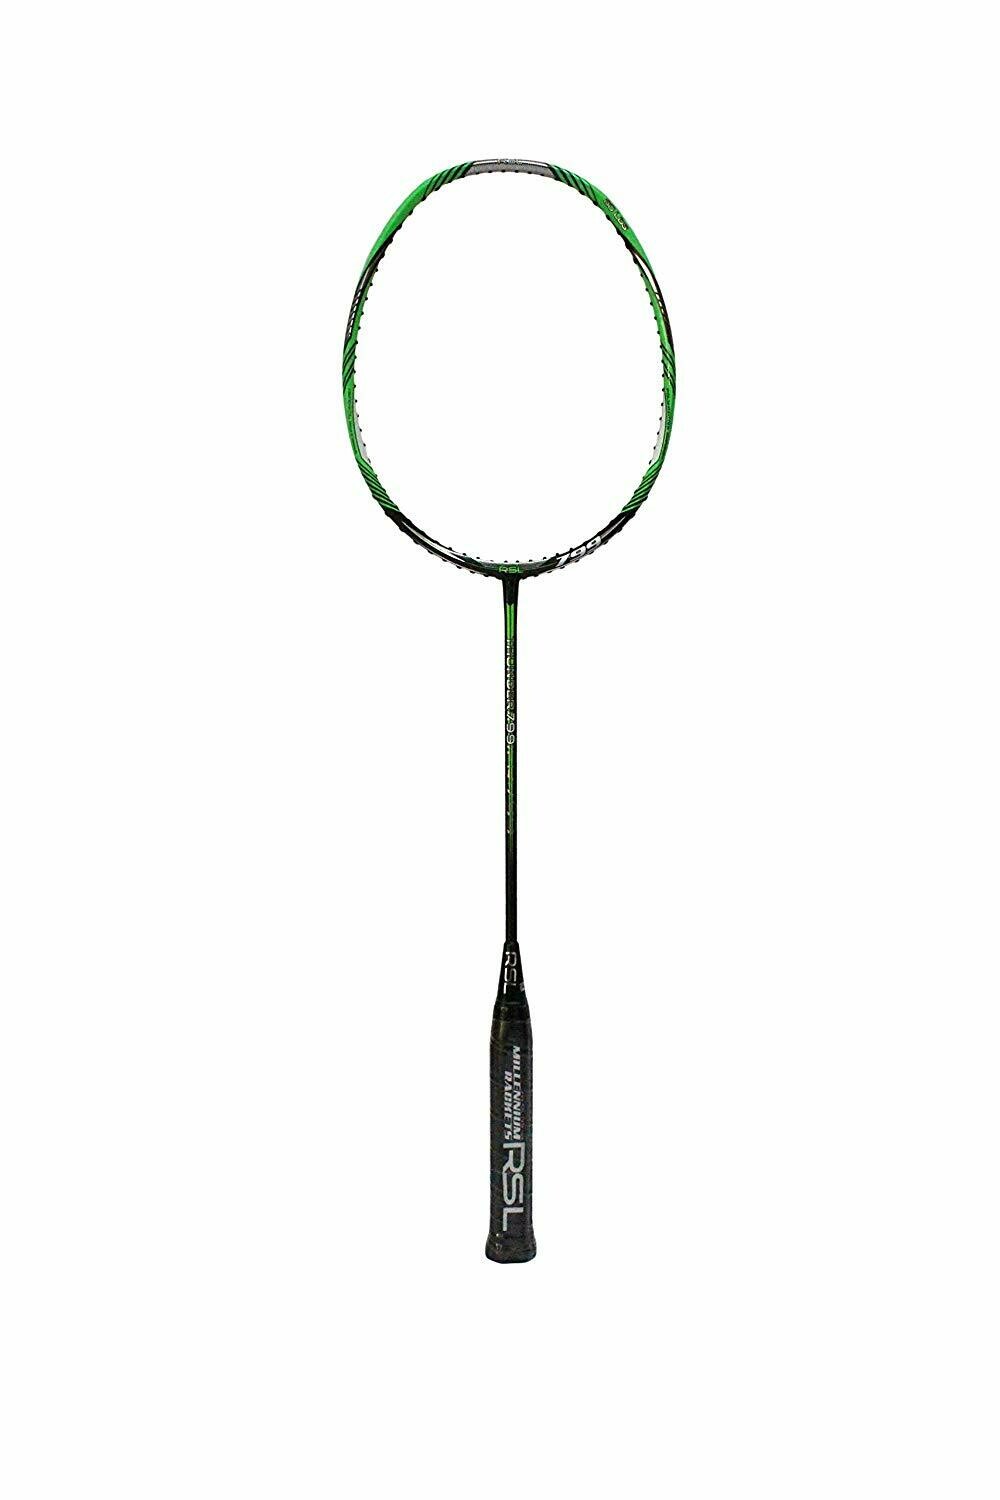 RSL Thunder 799 - Badminton Racquet